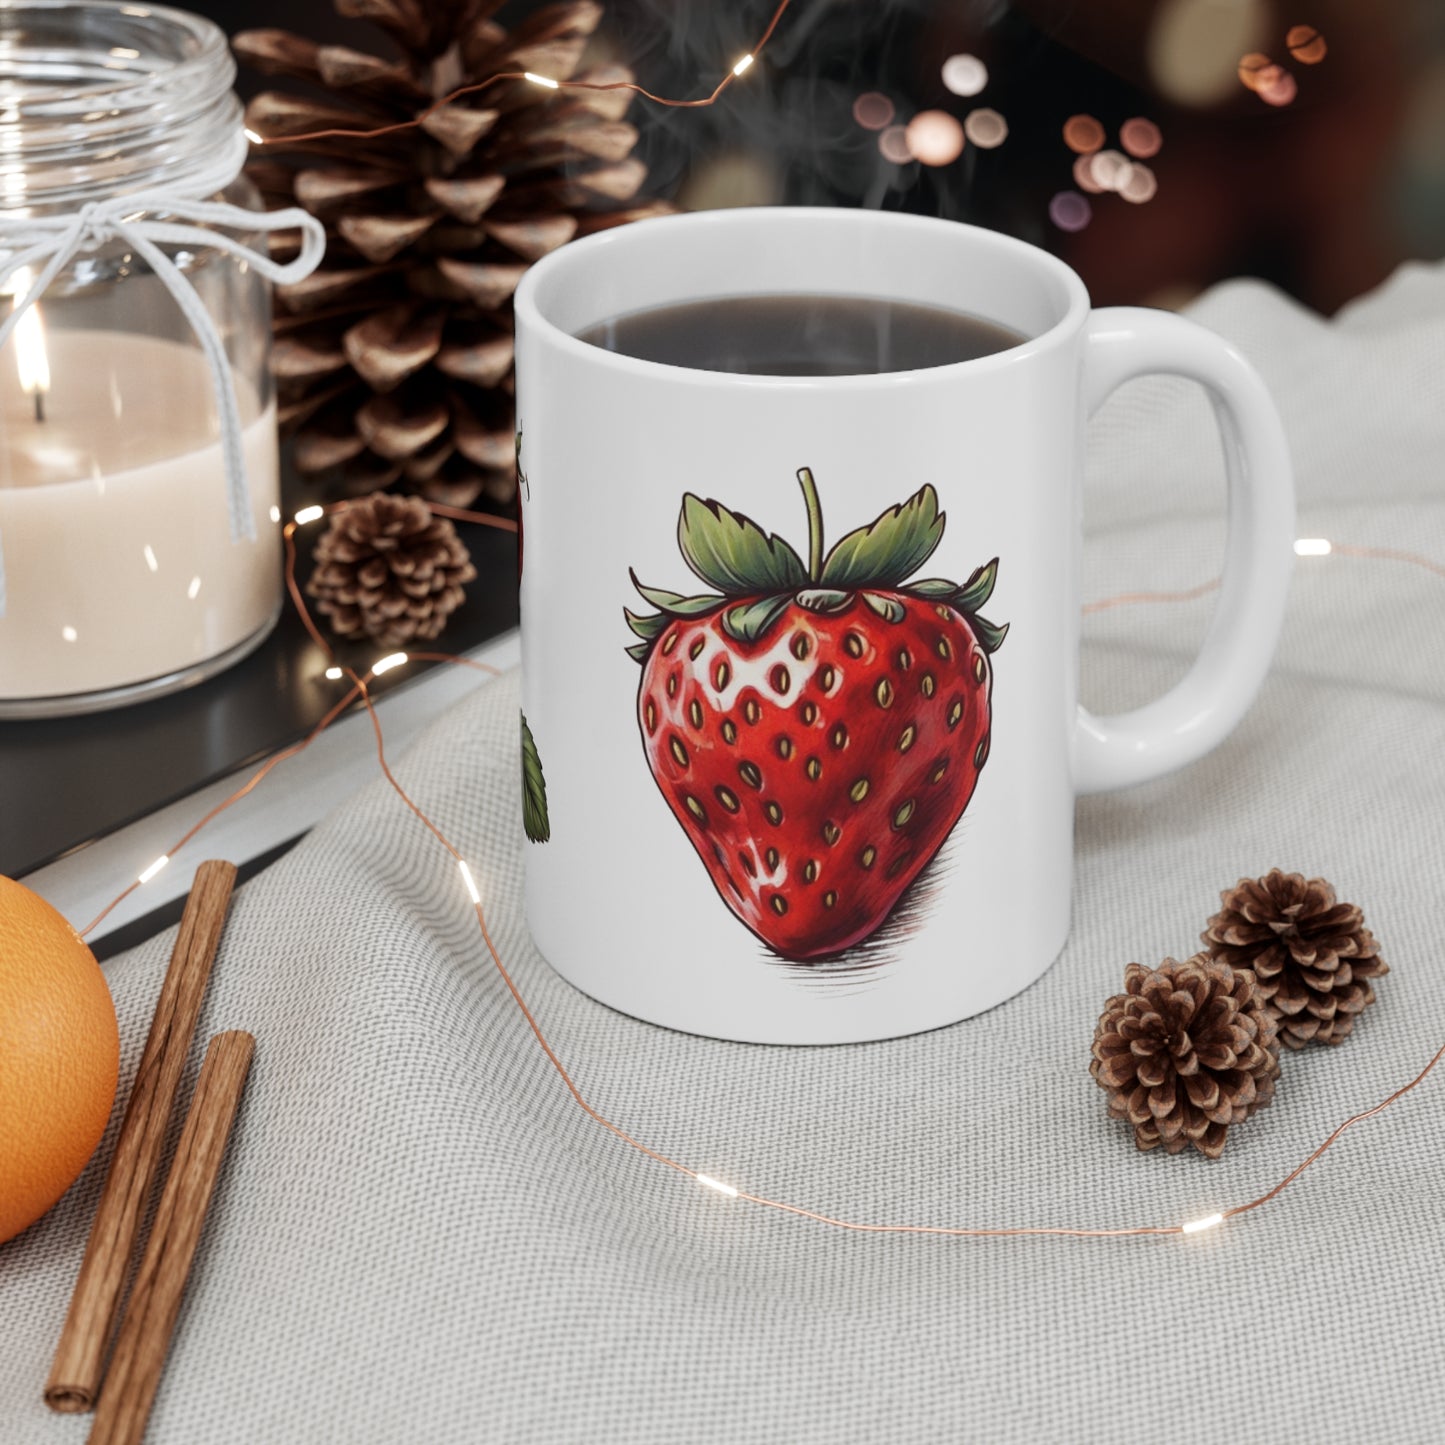 Strawberries Artwork Mug - Ceramic Coffee Mug 11oz